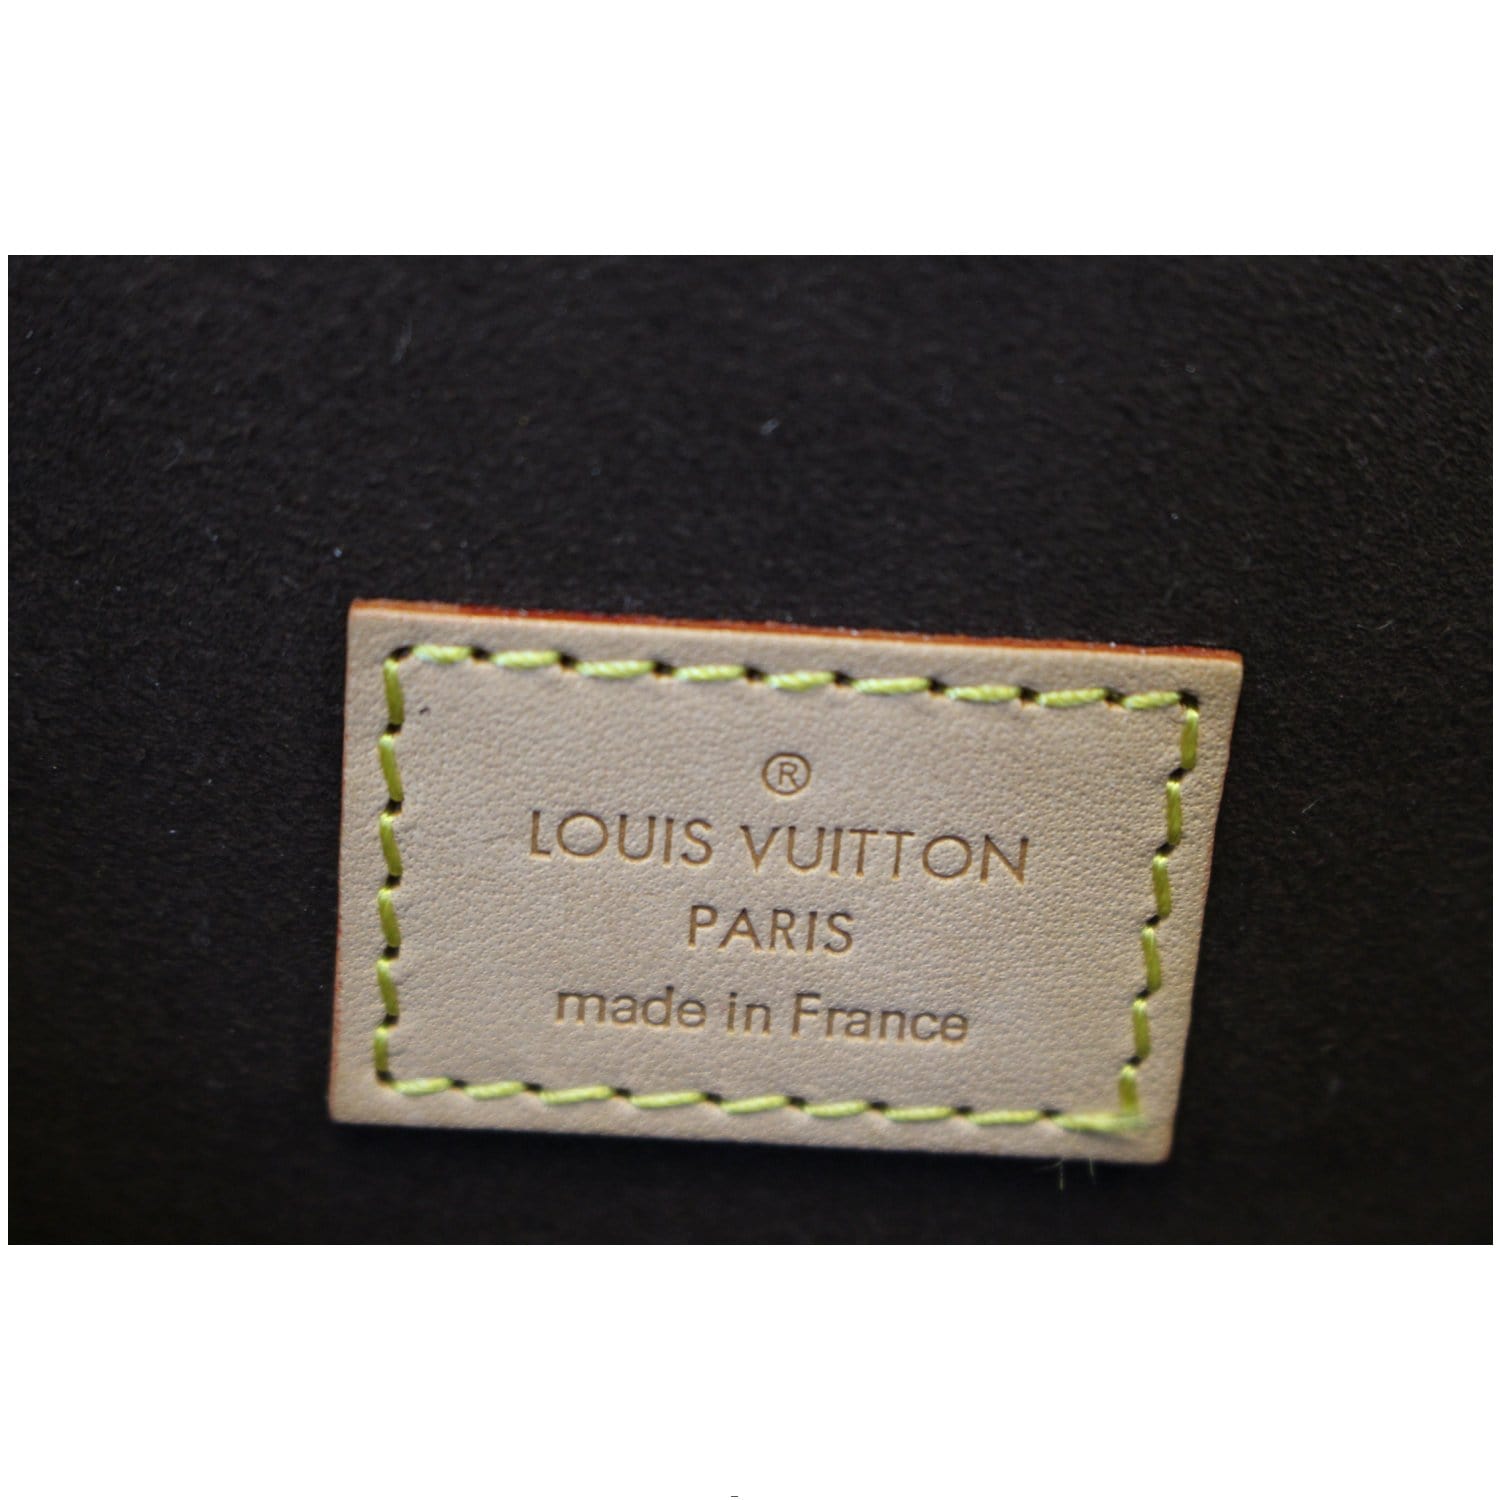 Louis Vuitton Micro Metis Bag – ZAK BAGS ©️